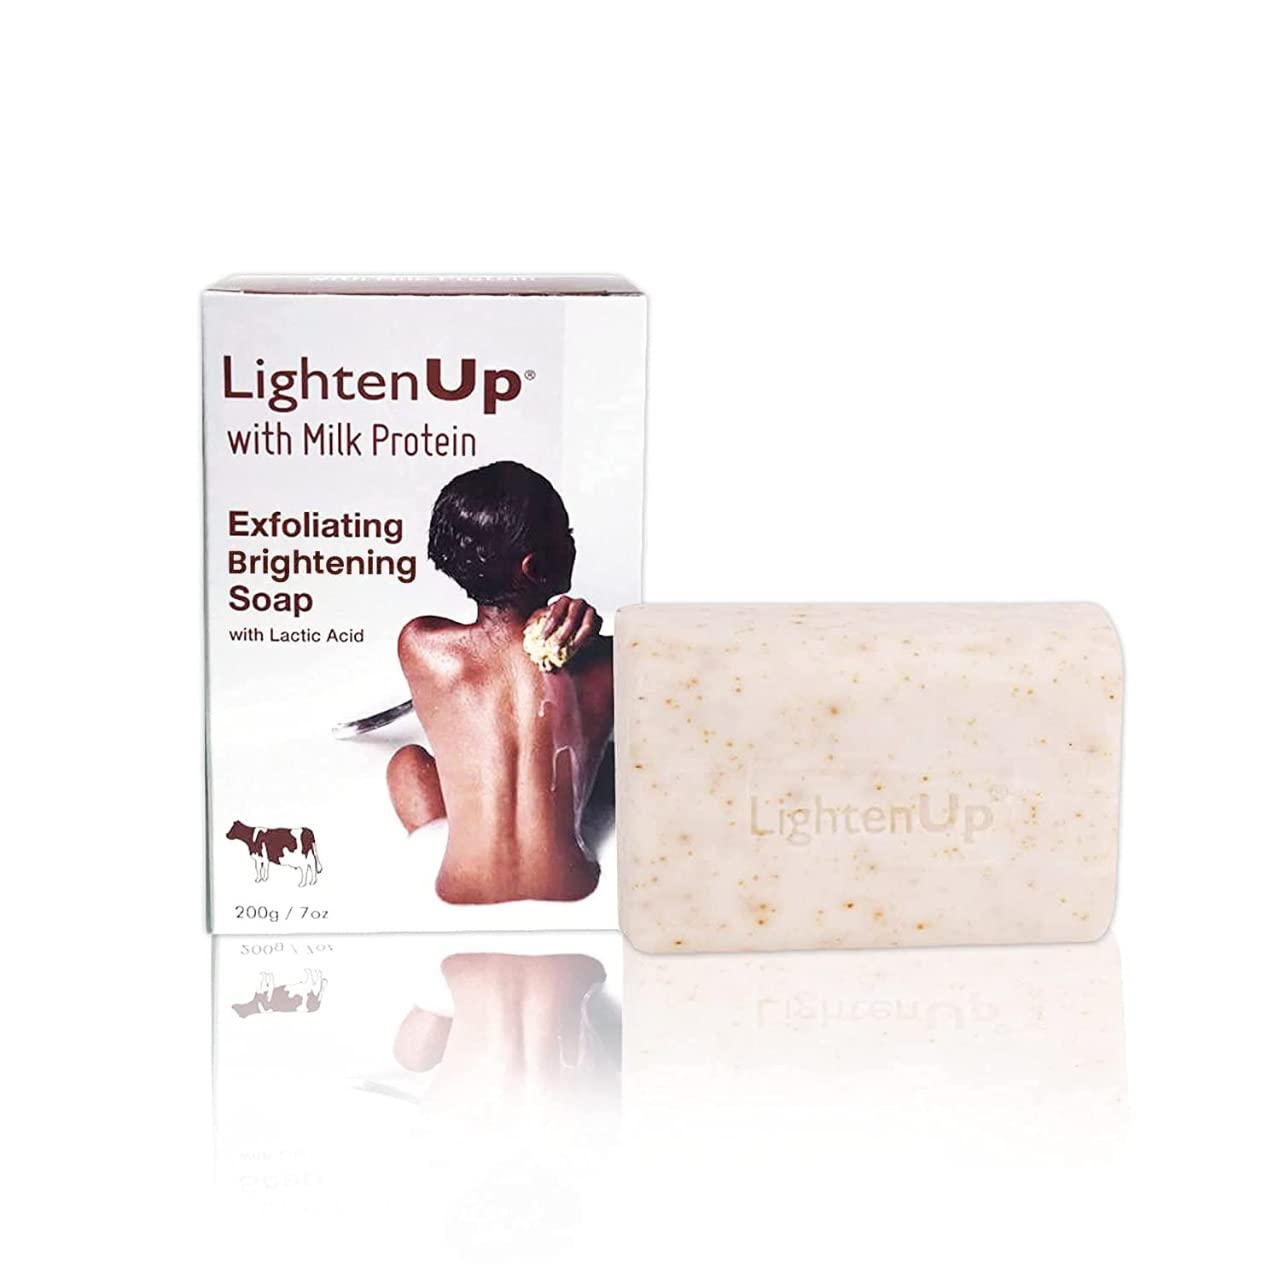 LightenUp Exfoliating Brightening Soap